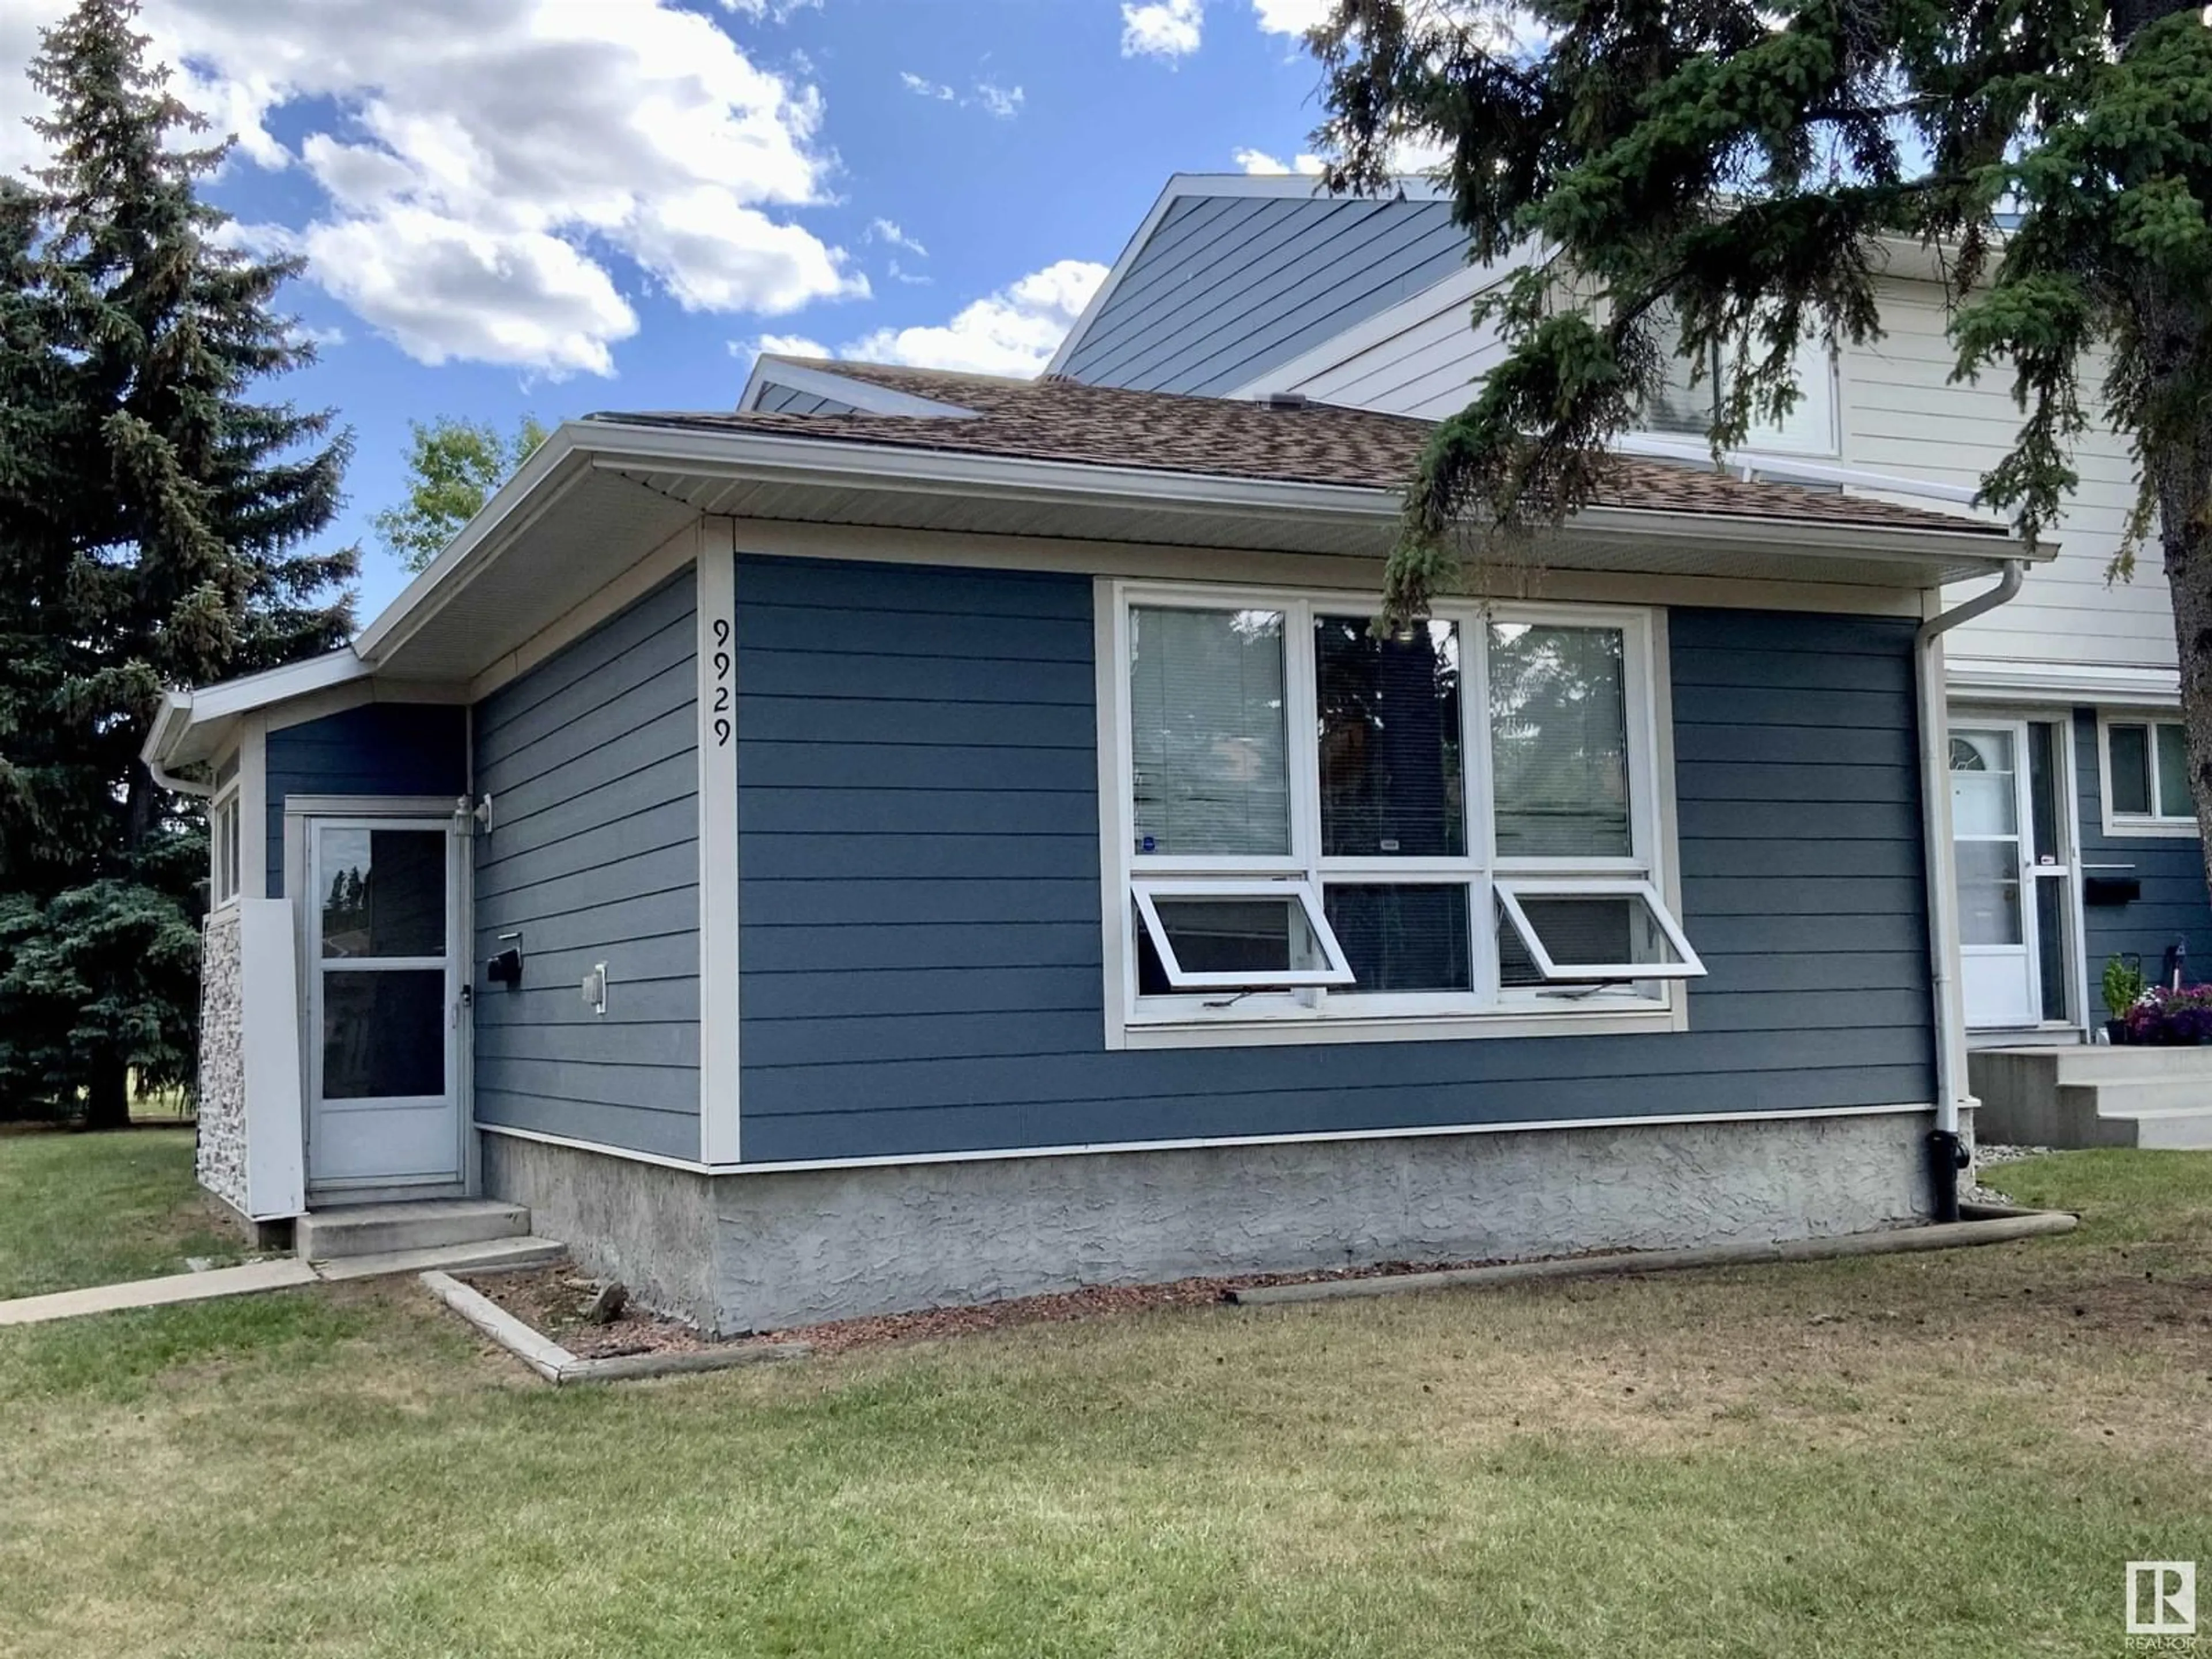 Home with vinyl exterior material for 9929 171 AV NW, Edmonton Alberta T5X4X2